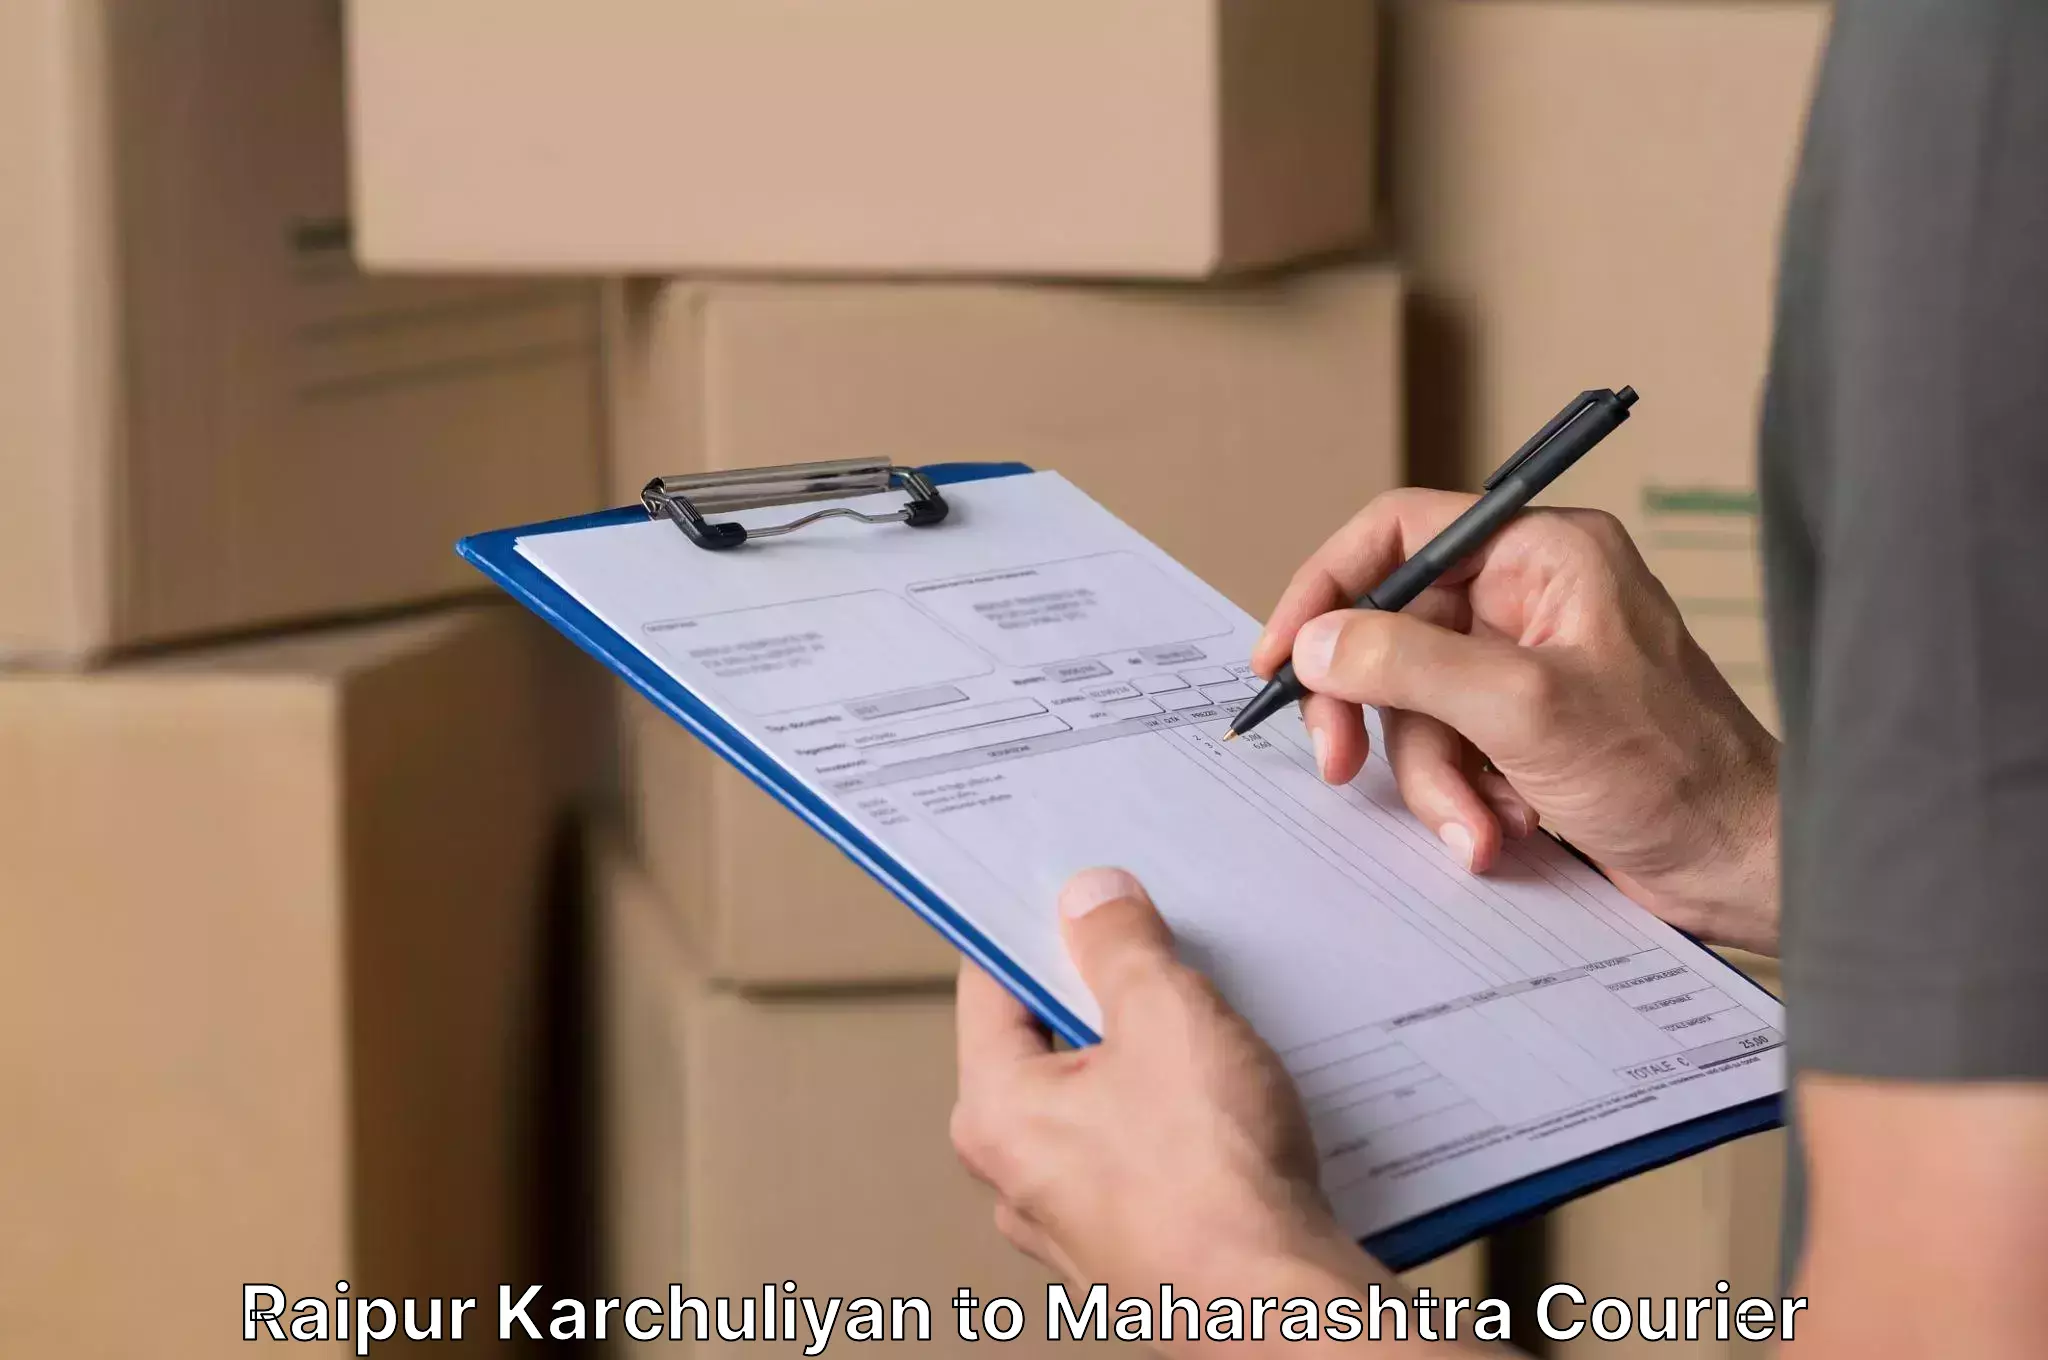 Furniture relocation experts Raipur Karchuliyan to Maharashtra